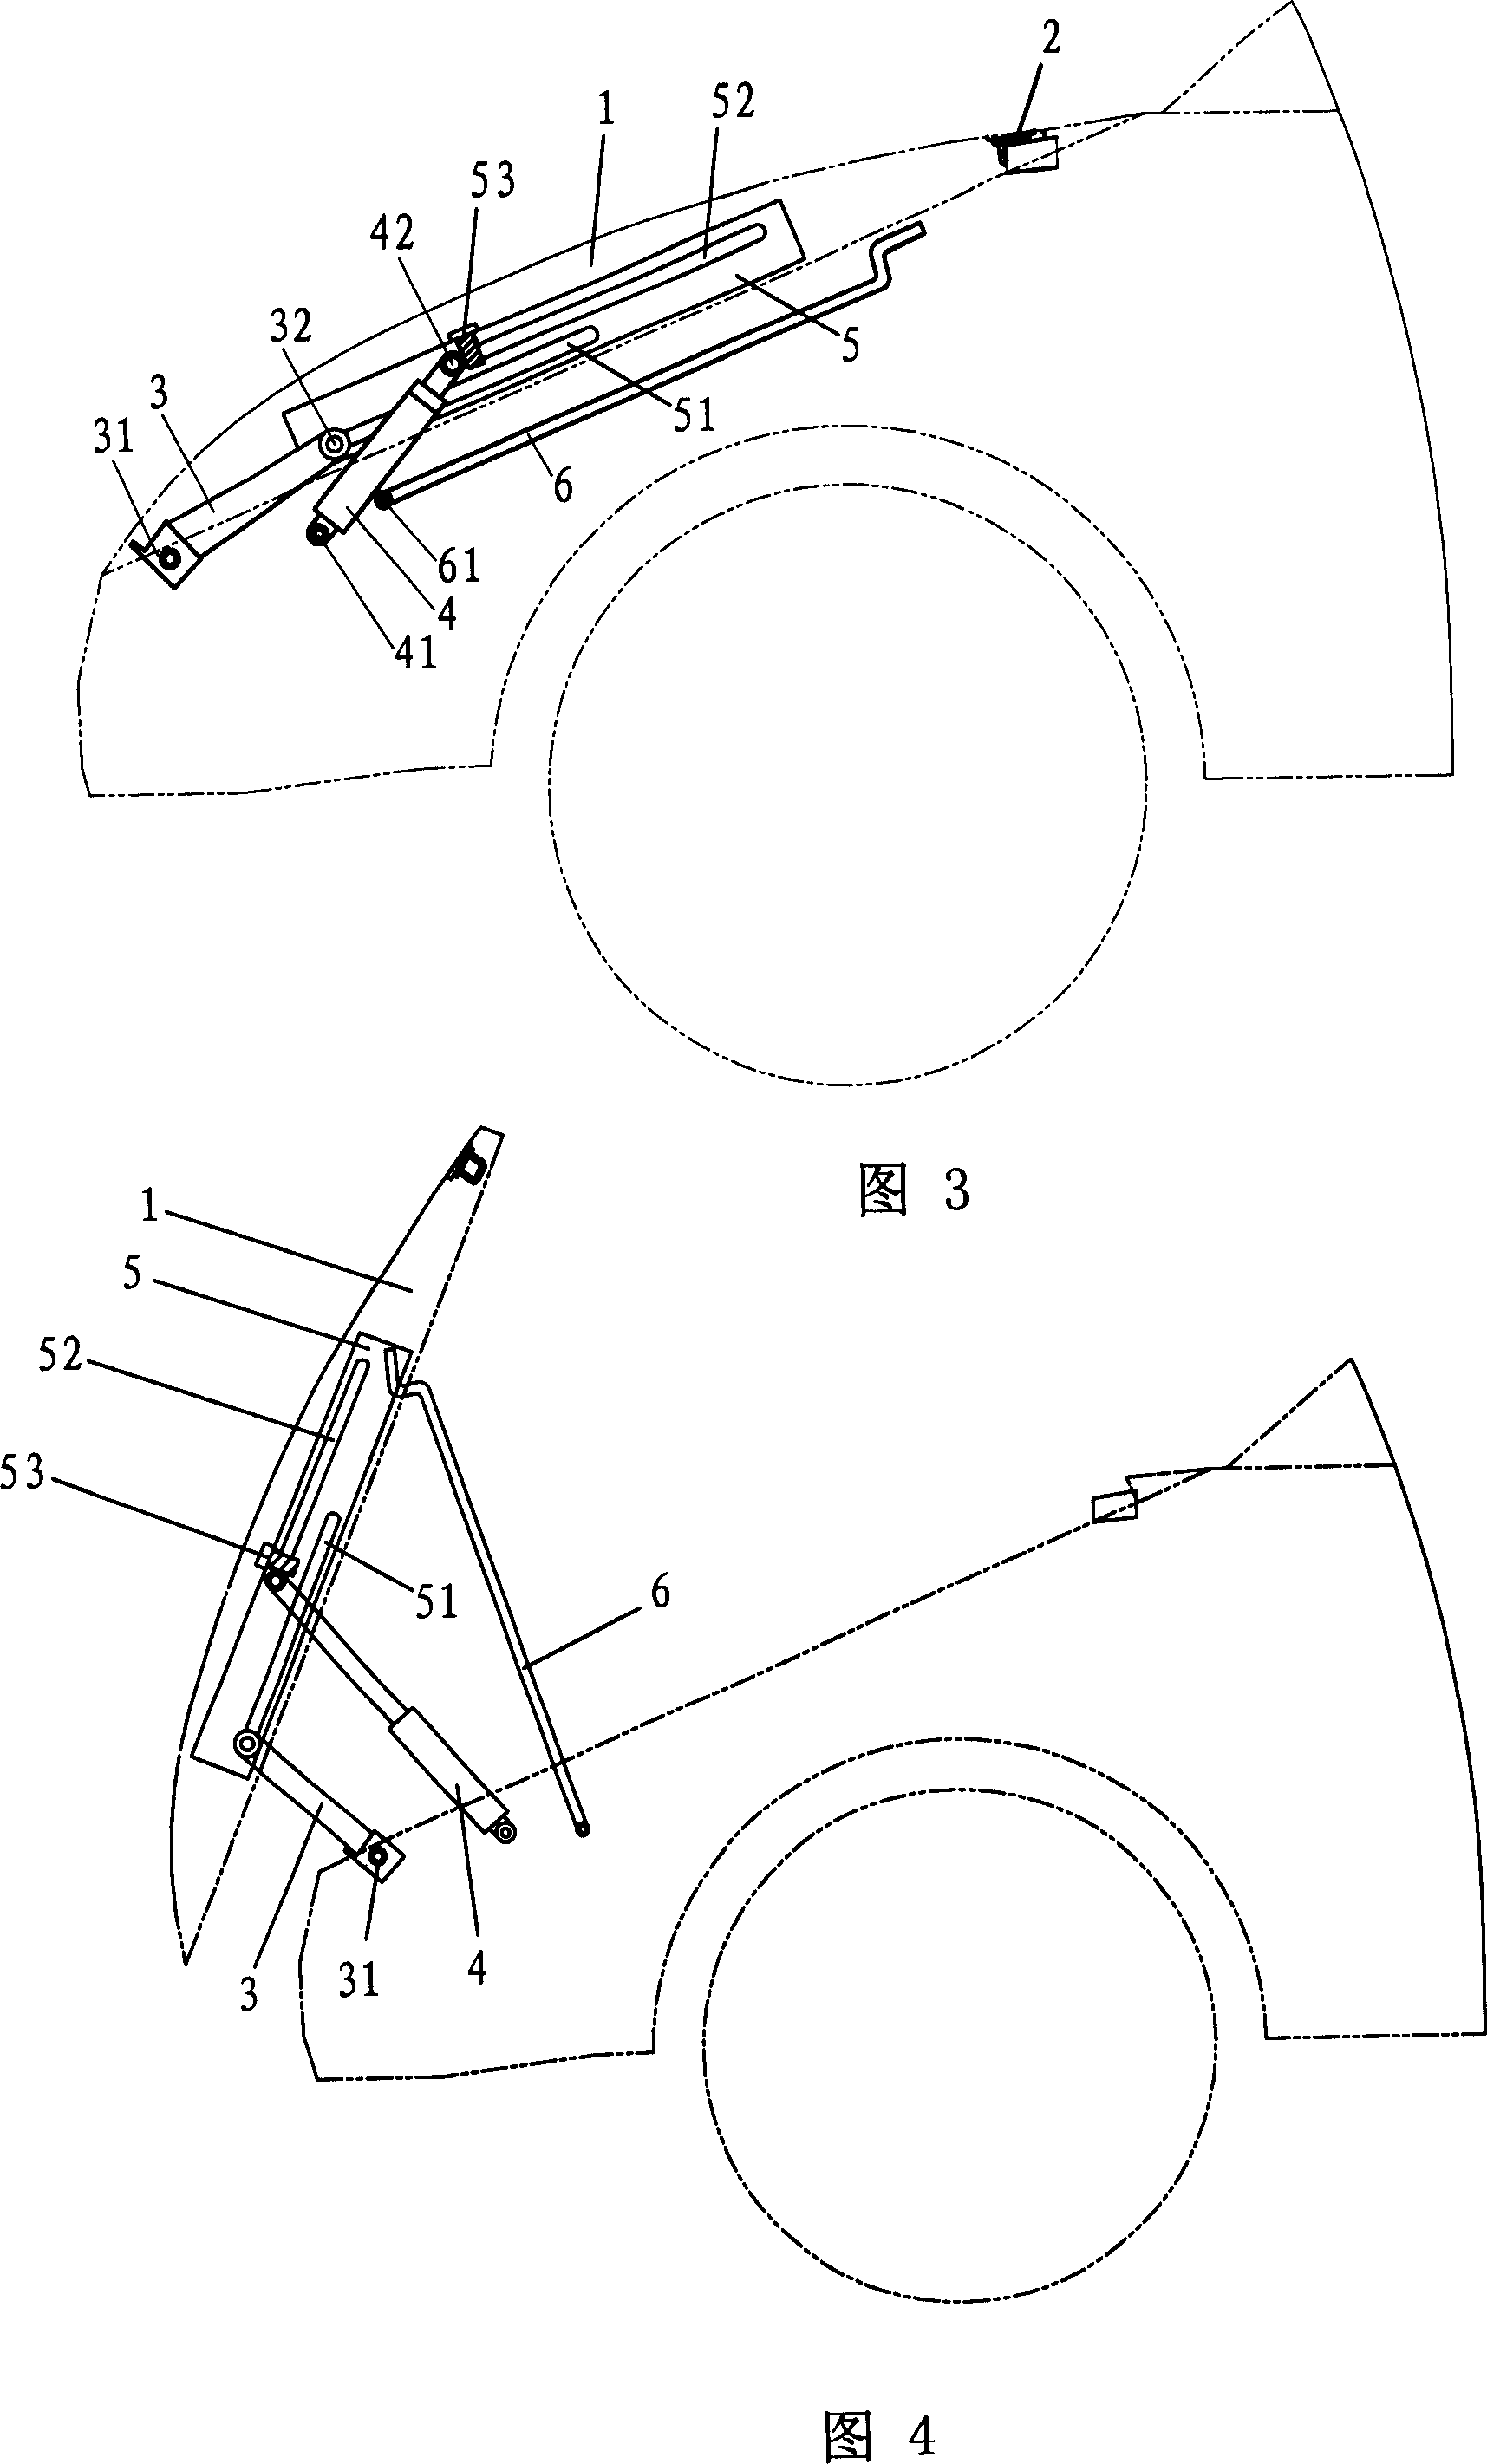 Operation mechanism of engine hood